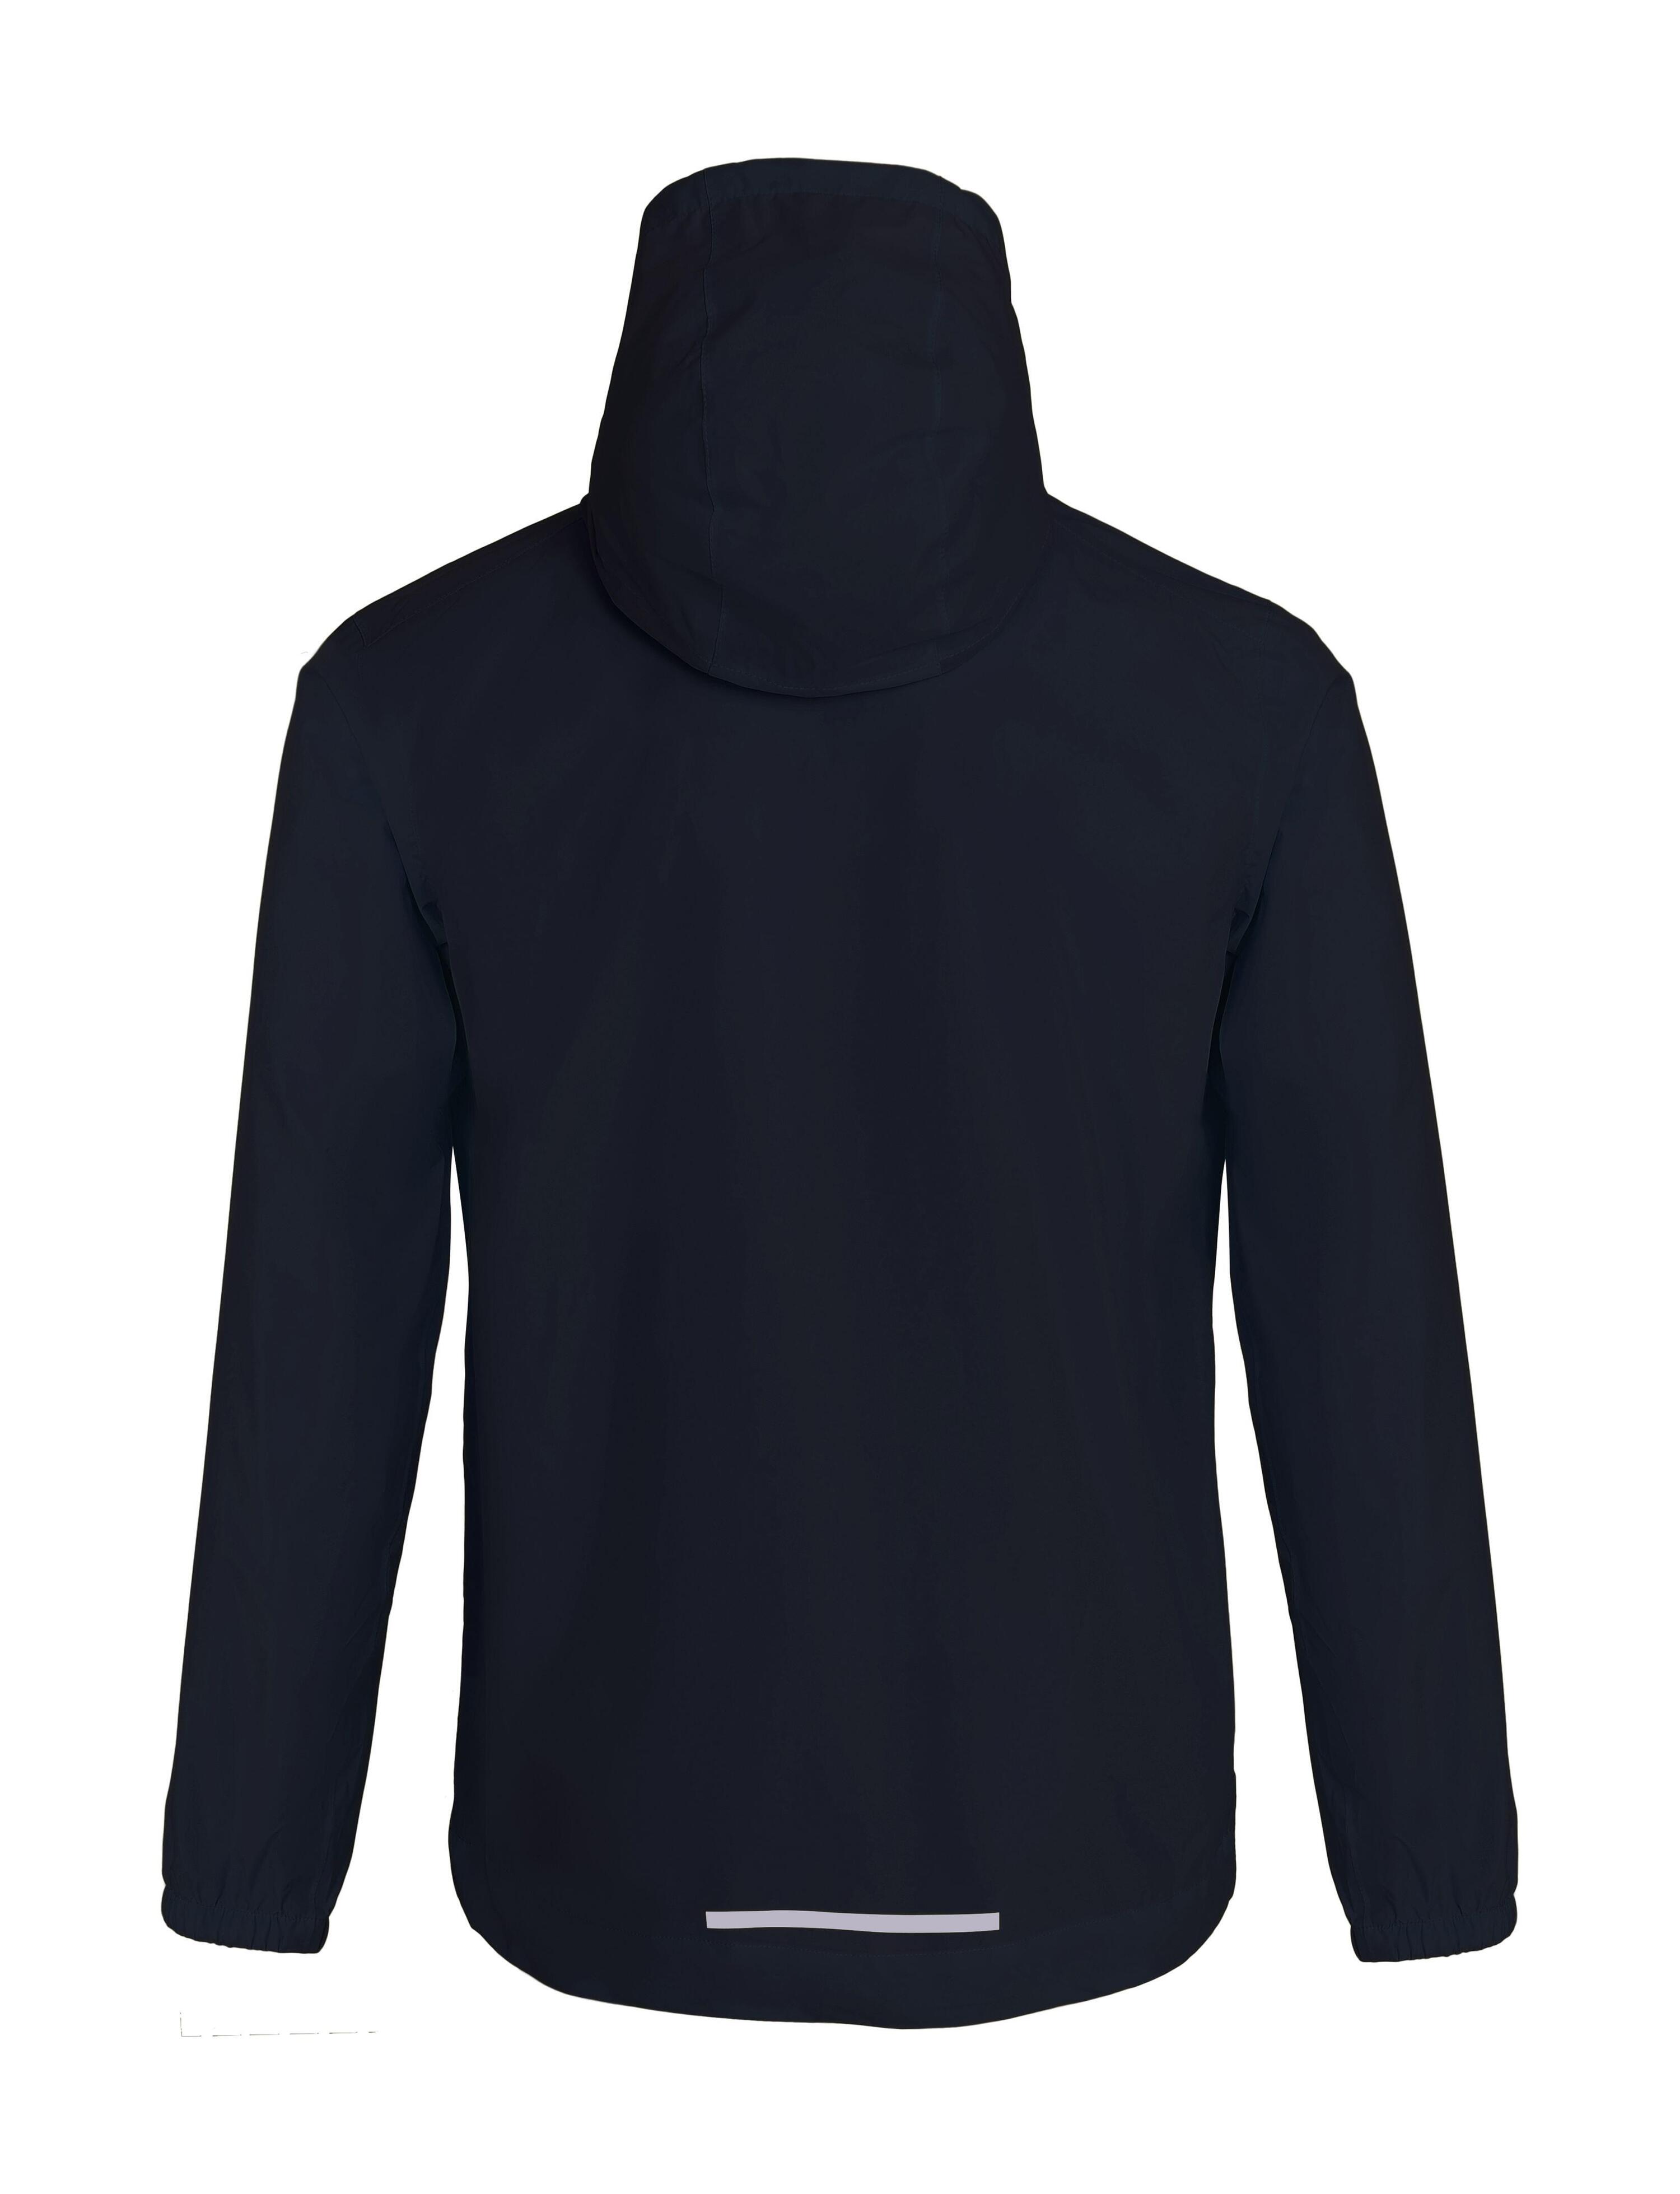 Boys' AirLite Rain Jacket with Zip Pockets - Navy Blazer 3/5